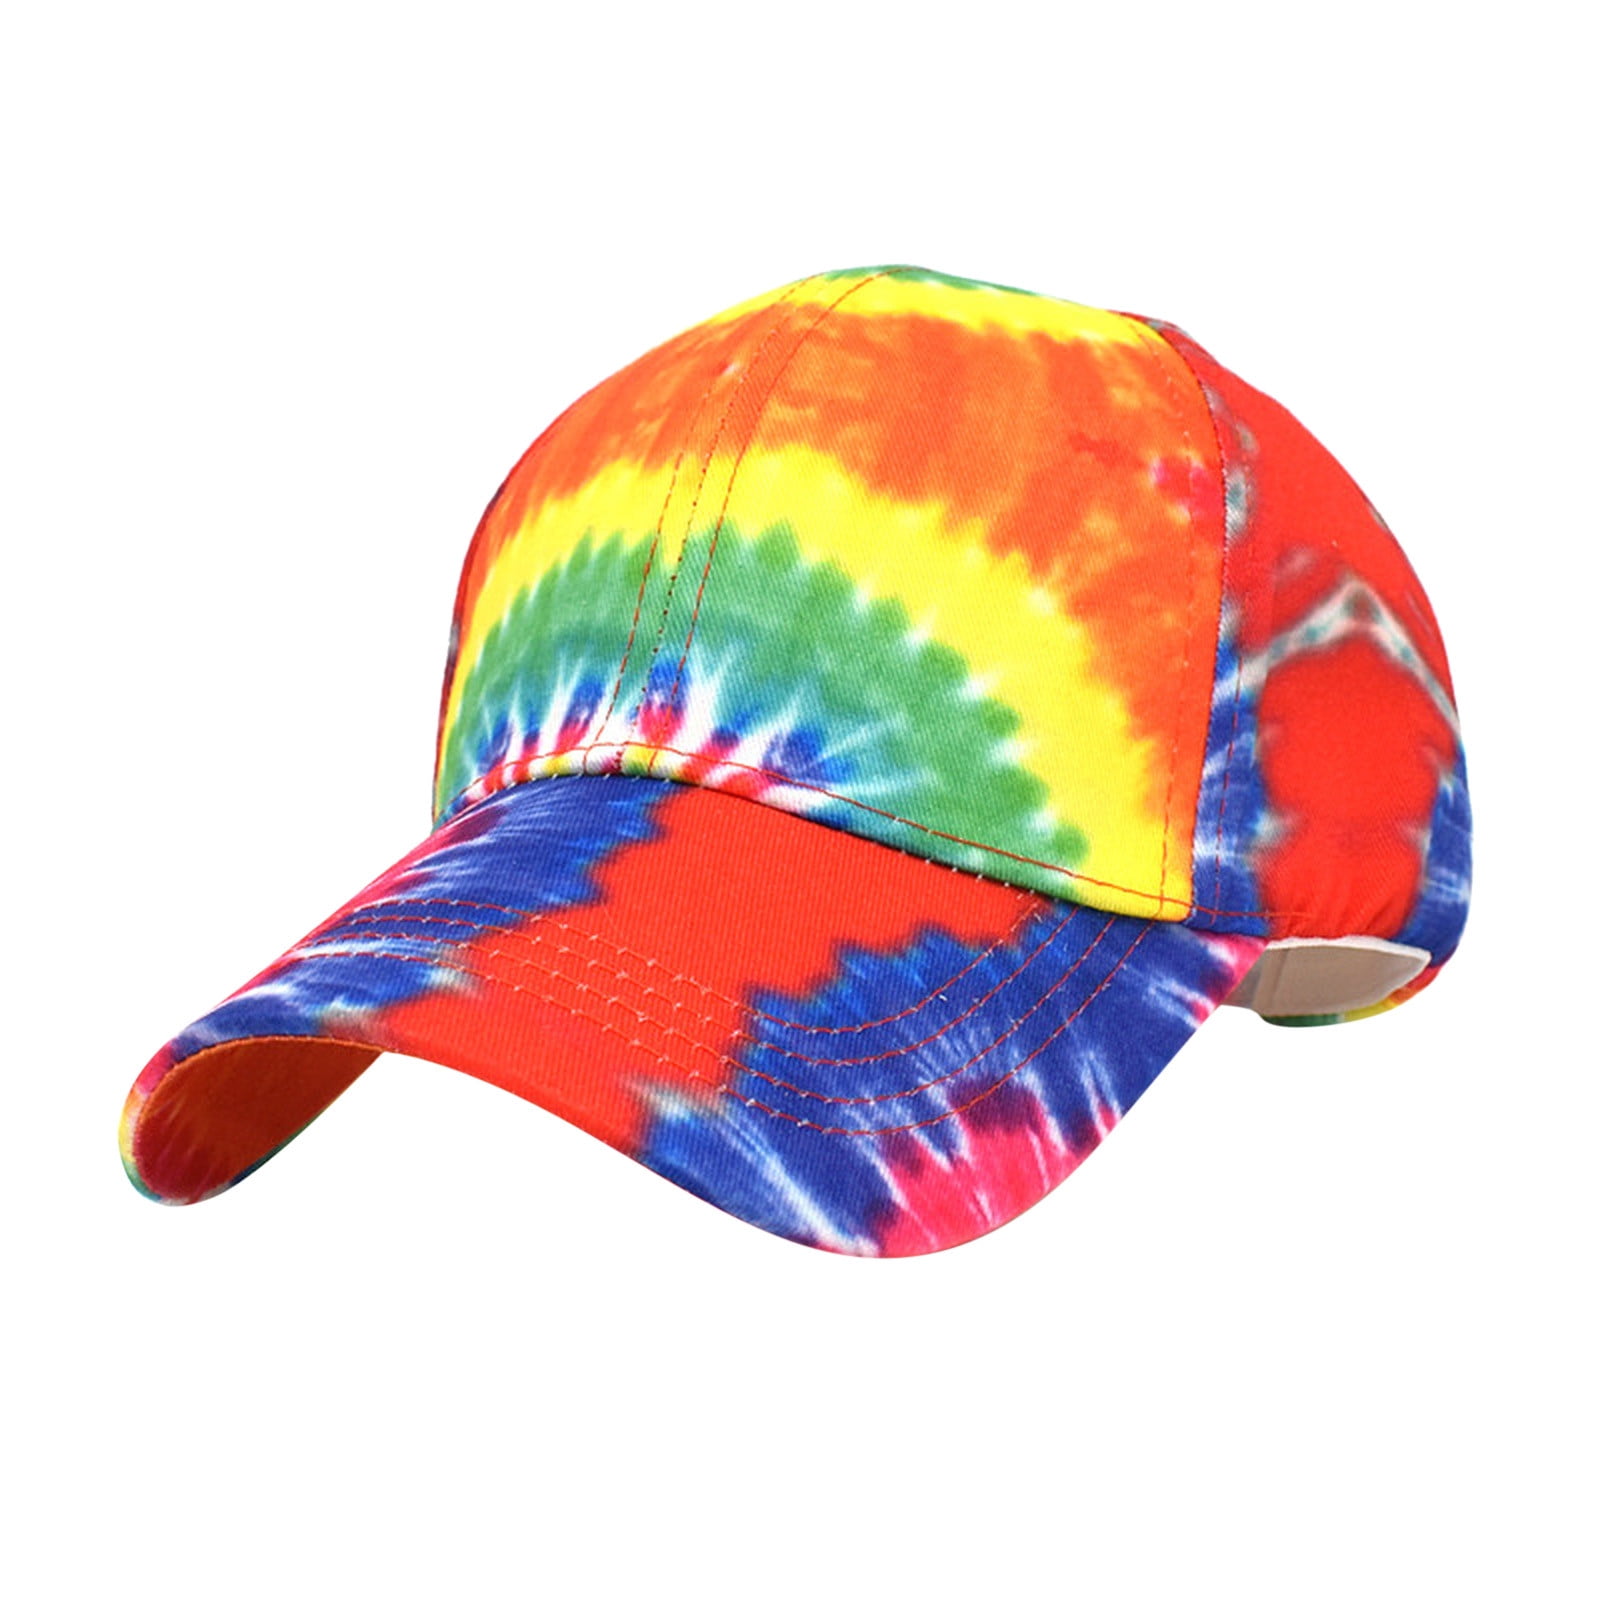 Perfectly Customized Rainbow Dinosaur Unisex Baseball Cap Cotton Denim Adjustable Outdoor Sports Cap for Men Or Women